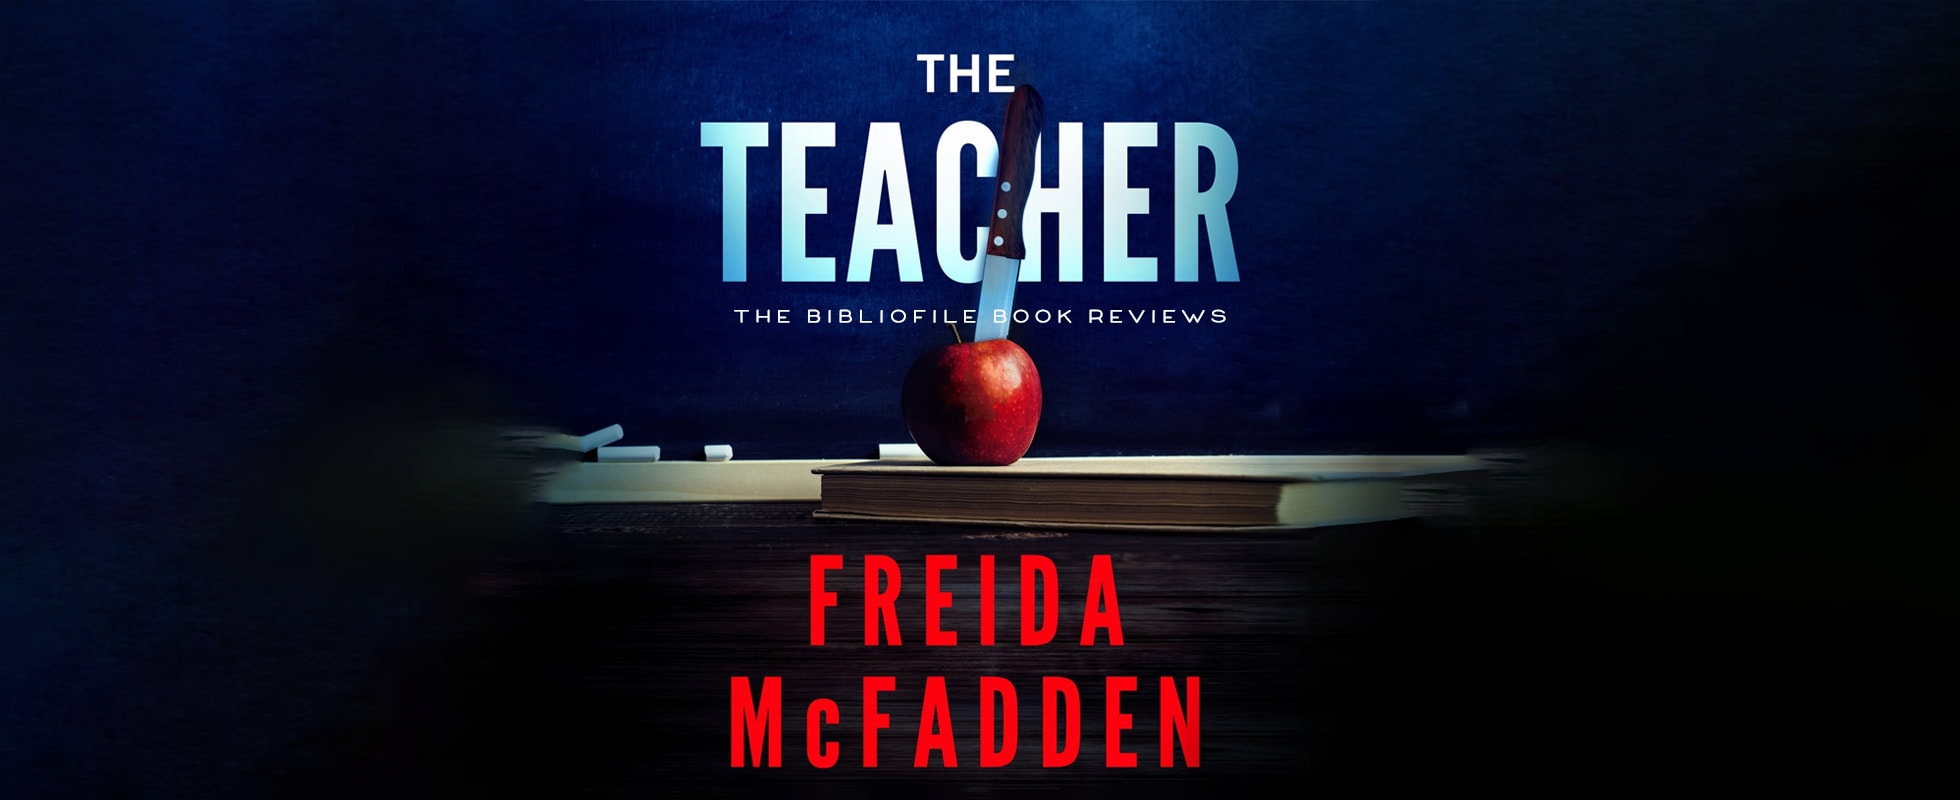 the teacher freida mcfadden book review plot summary synopsis recap discussion spoilers